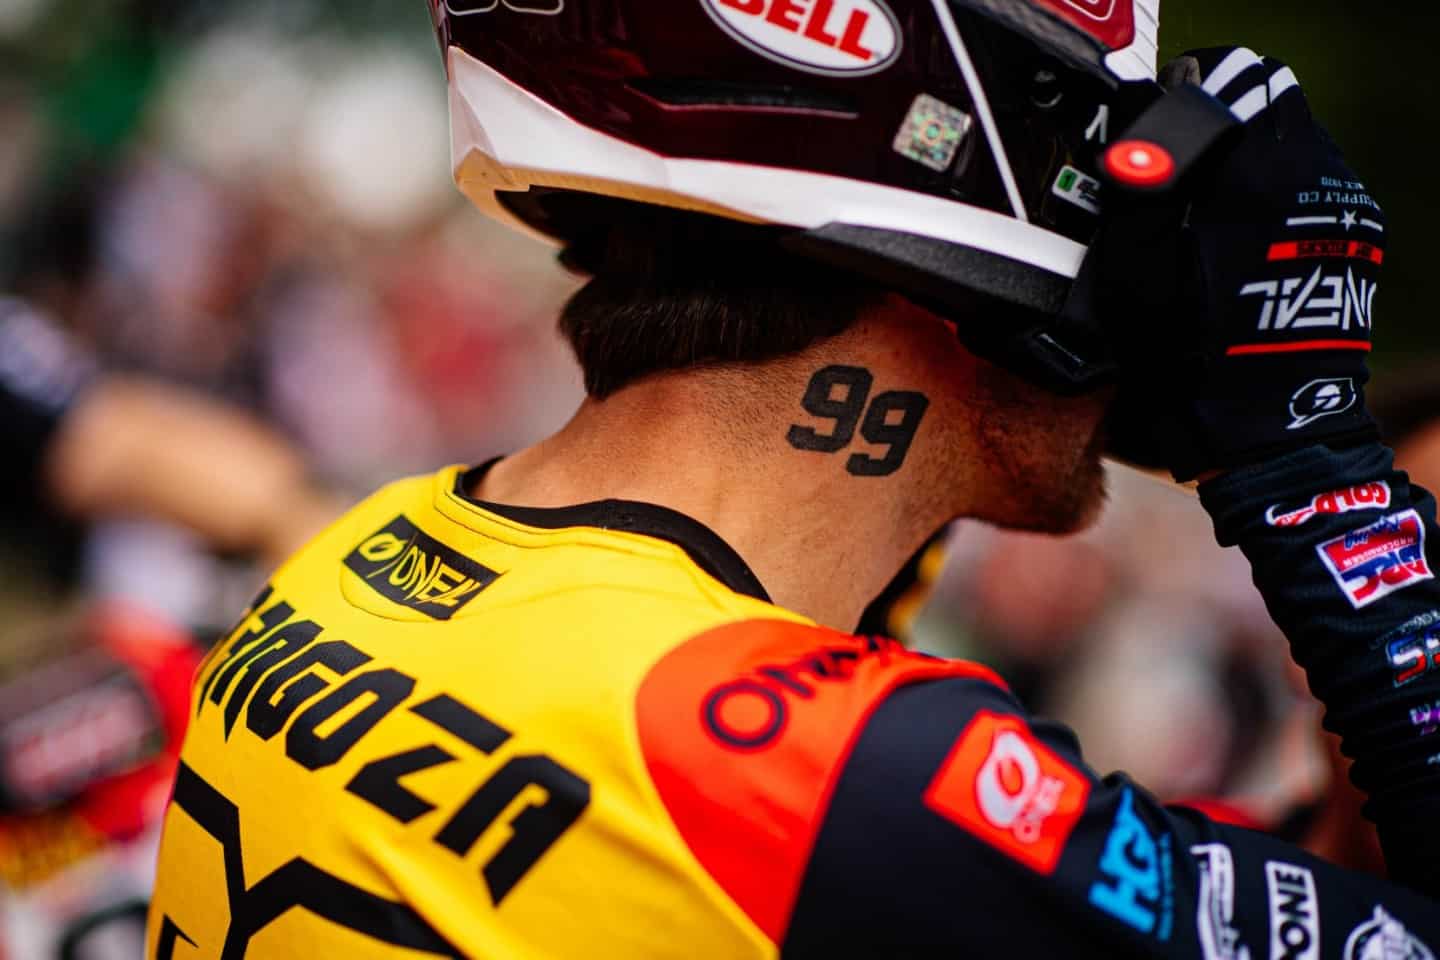 PM KMP Honda Racing - ADAC MX Masters in Dreetz